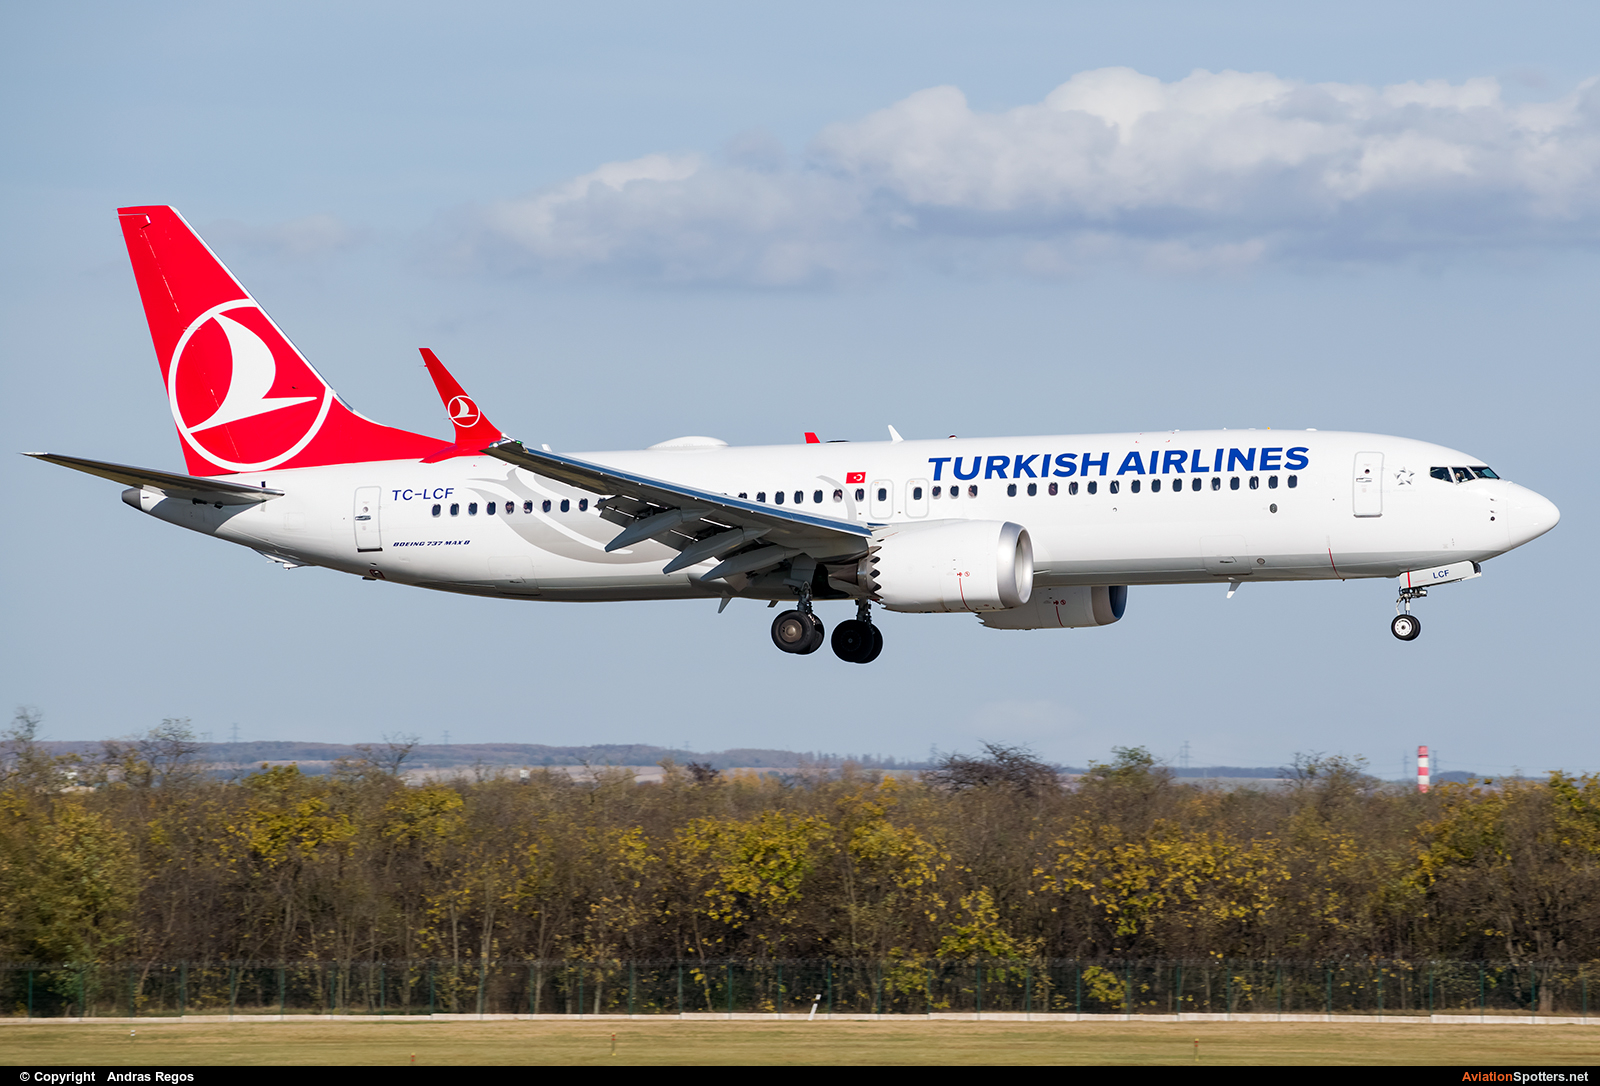 Turkish Airlines  -  737 MAX 8  (TC-LCF) By Andras Regos (regos)